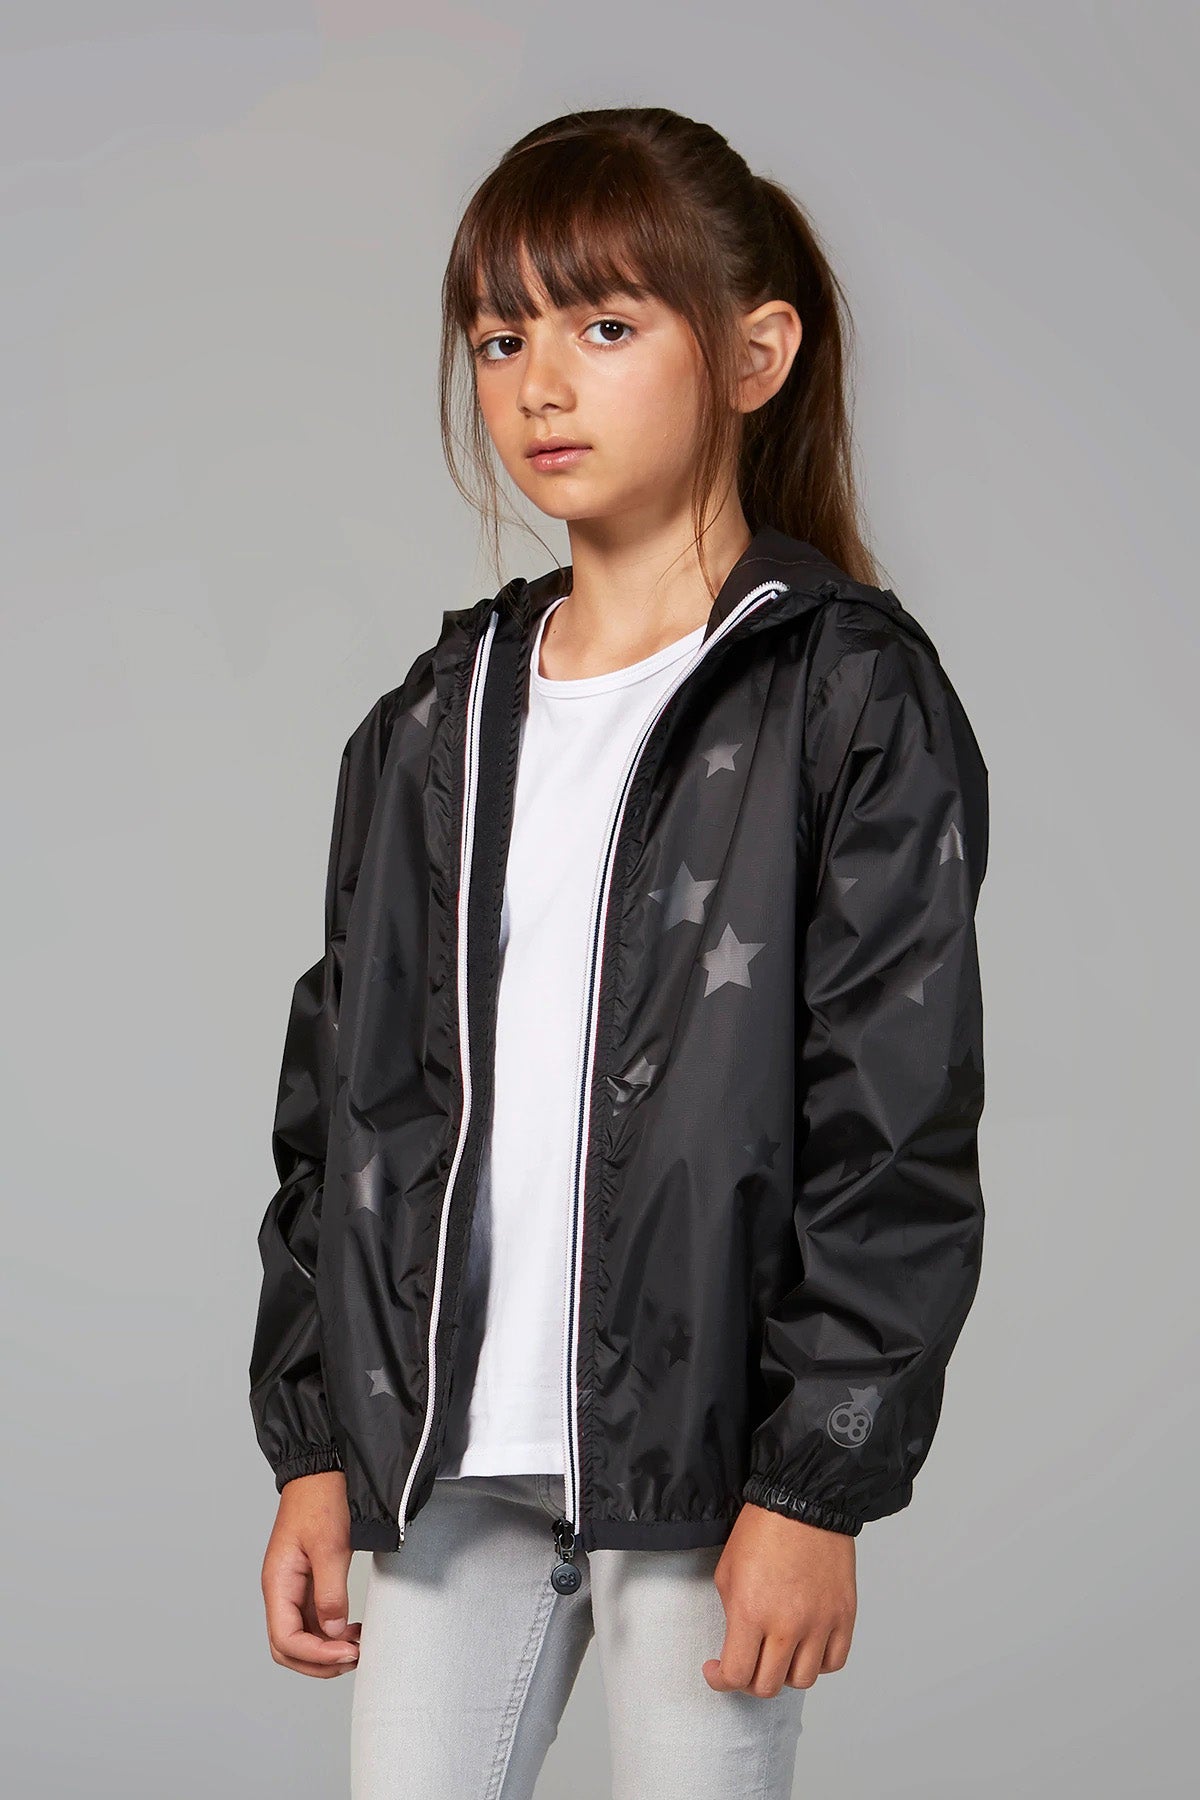 Kids rain jacket and windbreaker in black camo